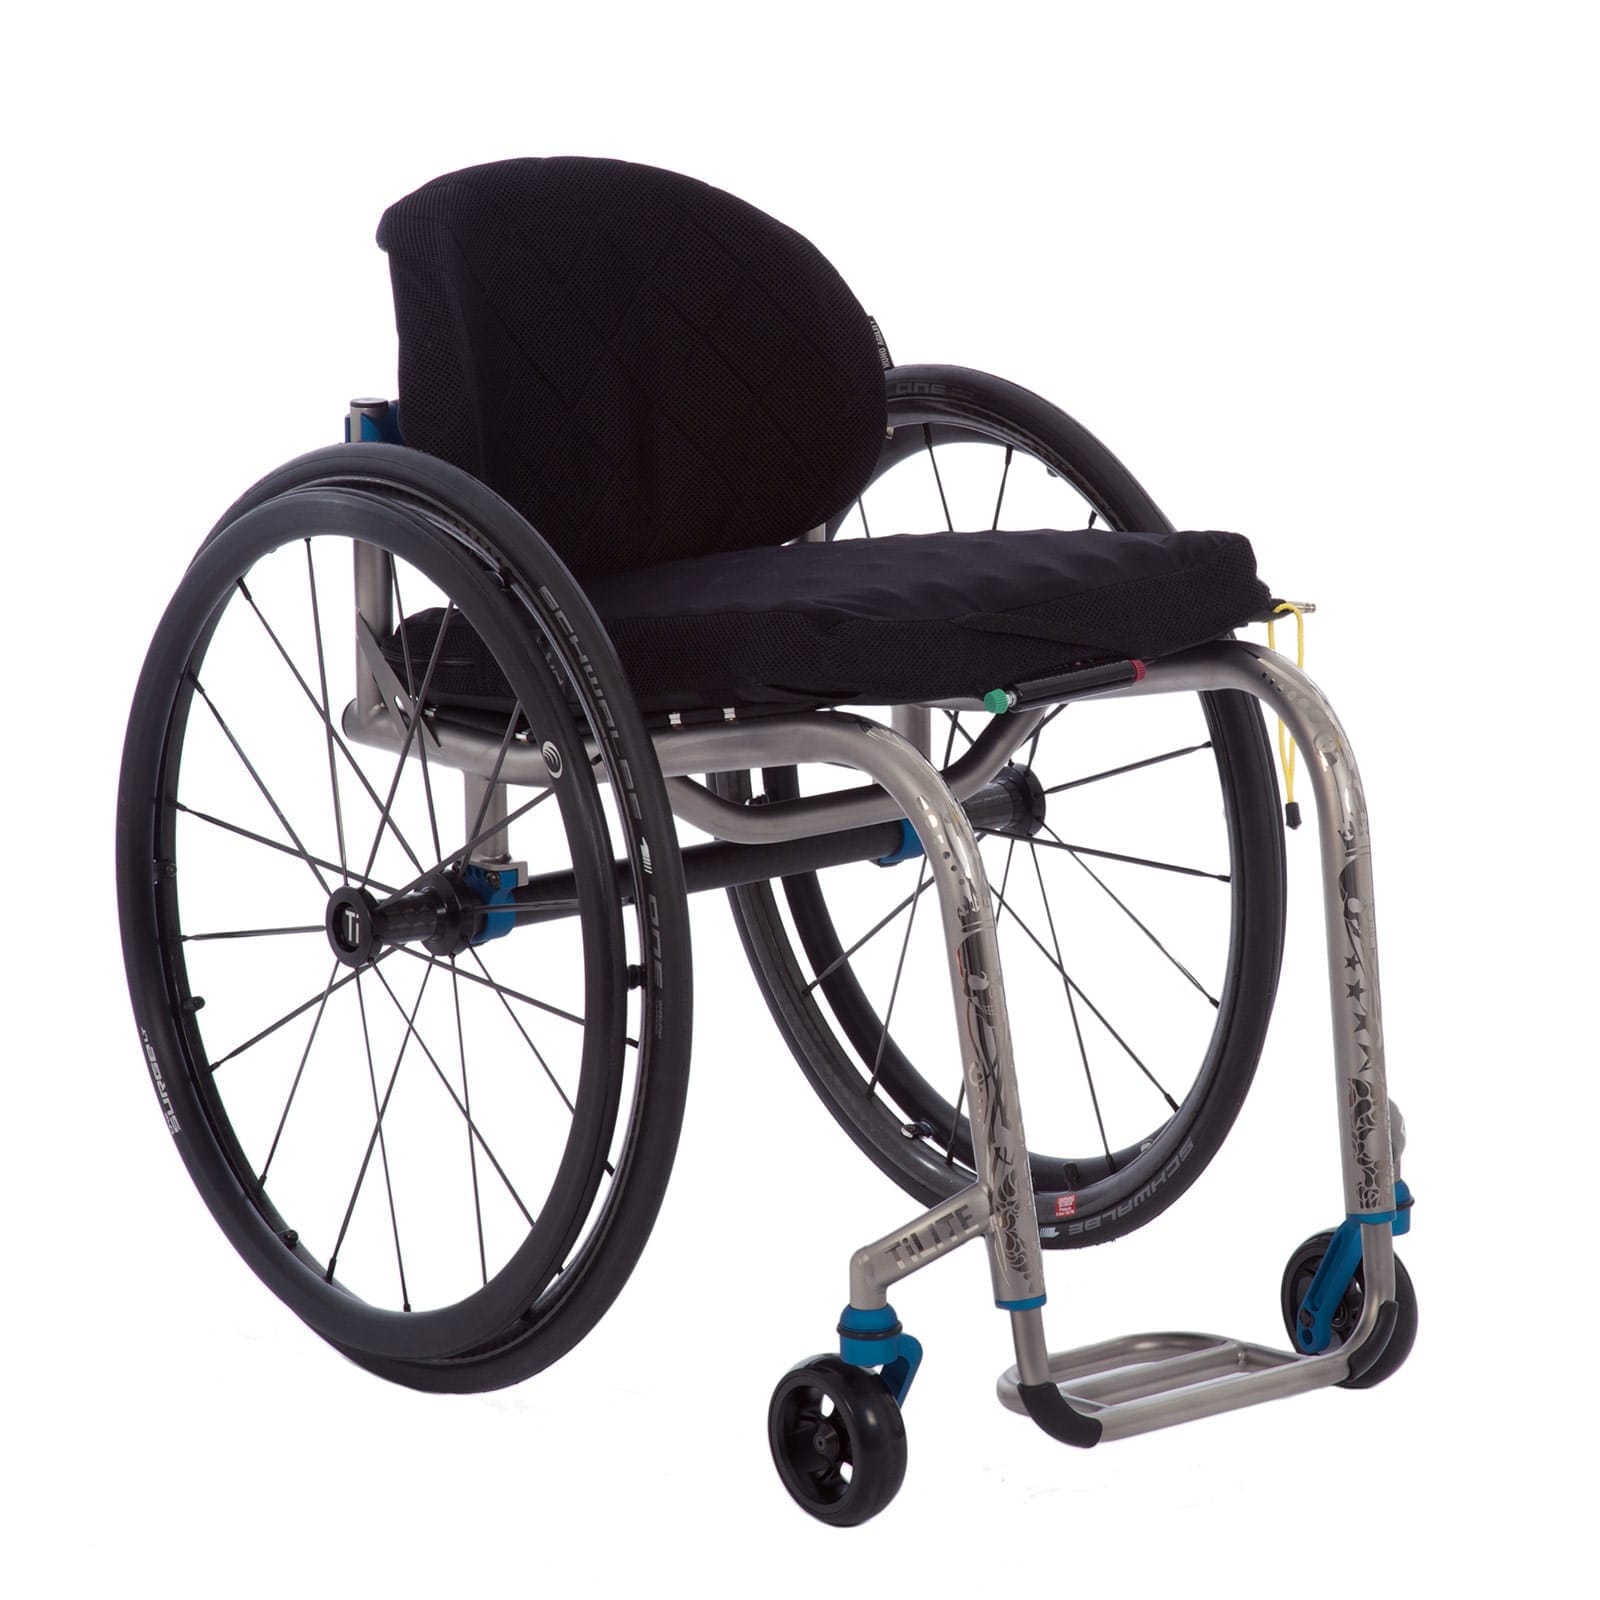 View TiLite ZR Rigid Titanium Wheelchair with Castor Arms information